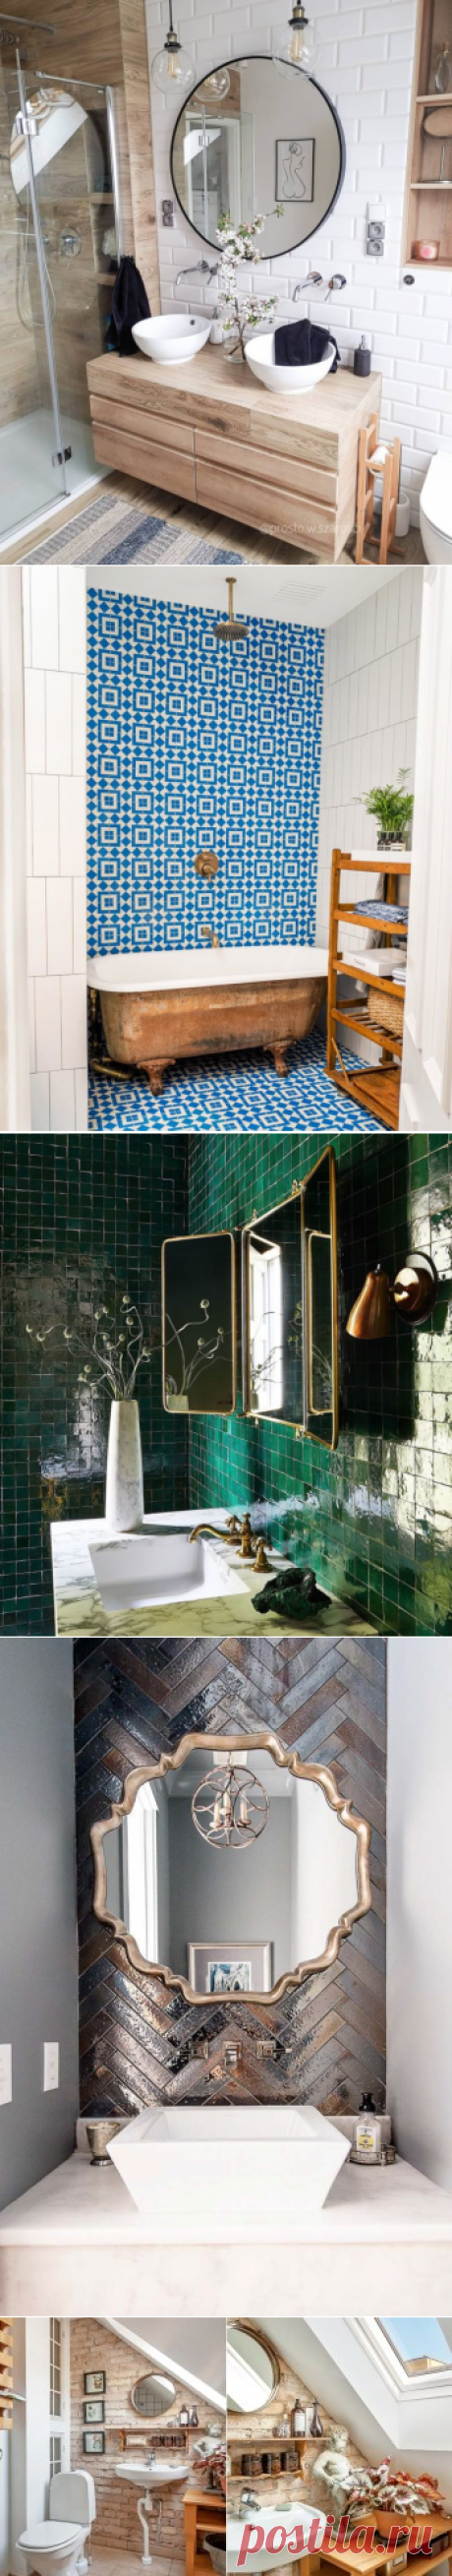 Bathroom Tile Design Ideas | Decoholic